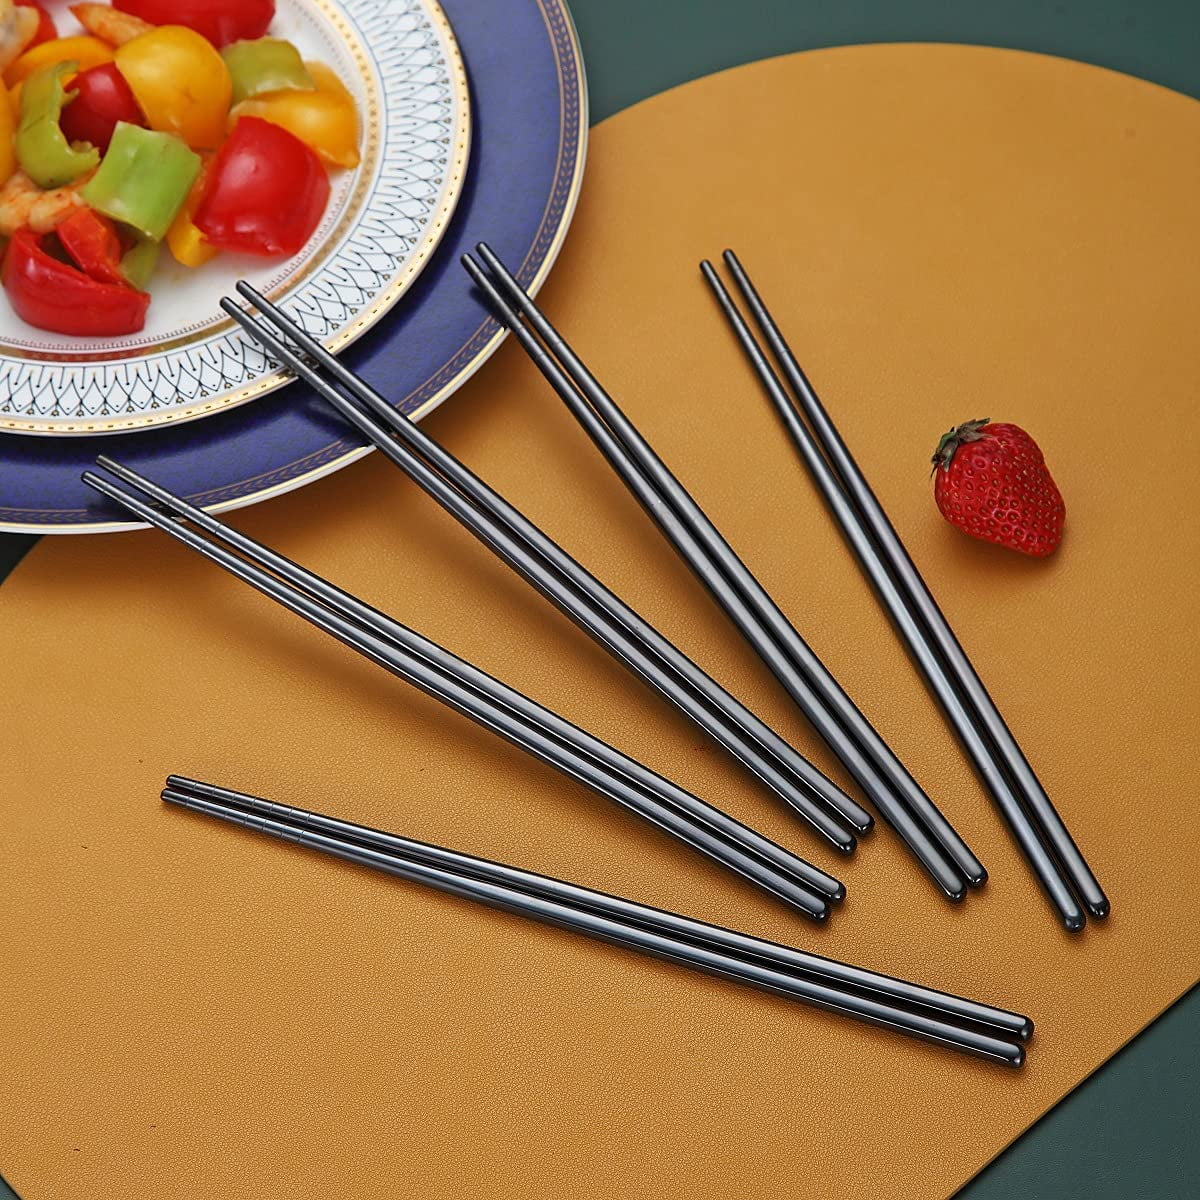 PRETYZOOM 30 Pairs Stainless Steel Chopsticks Metal Chopsticks Reusable  Metal Chop Sticks Wooden Portable Utensils Japanese Chopsticks Daily Use